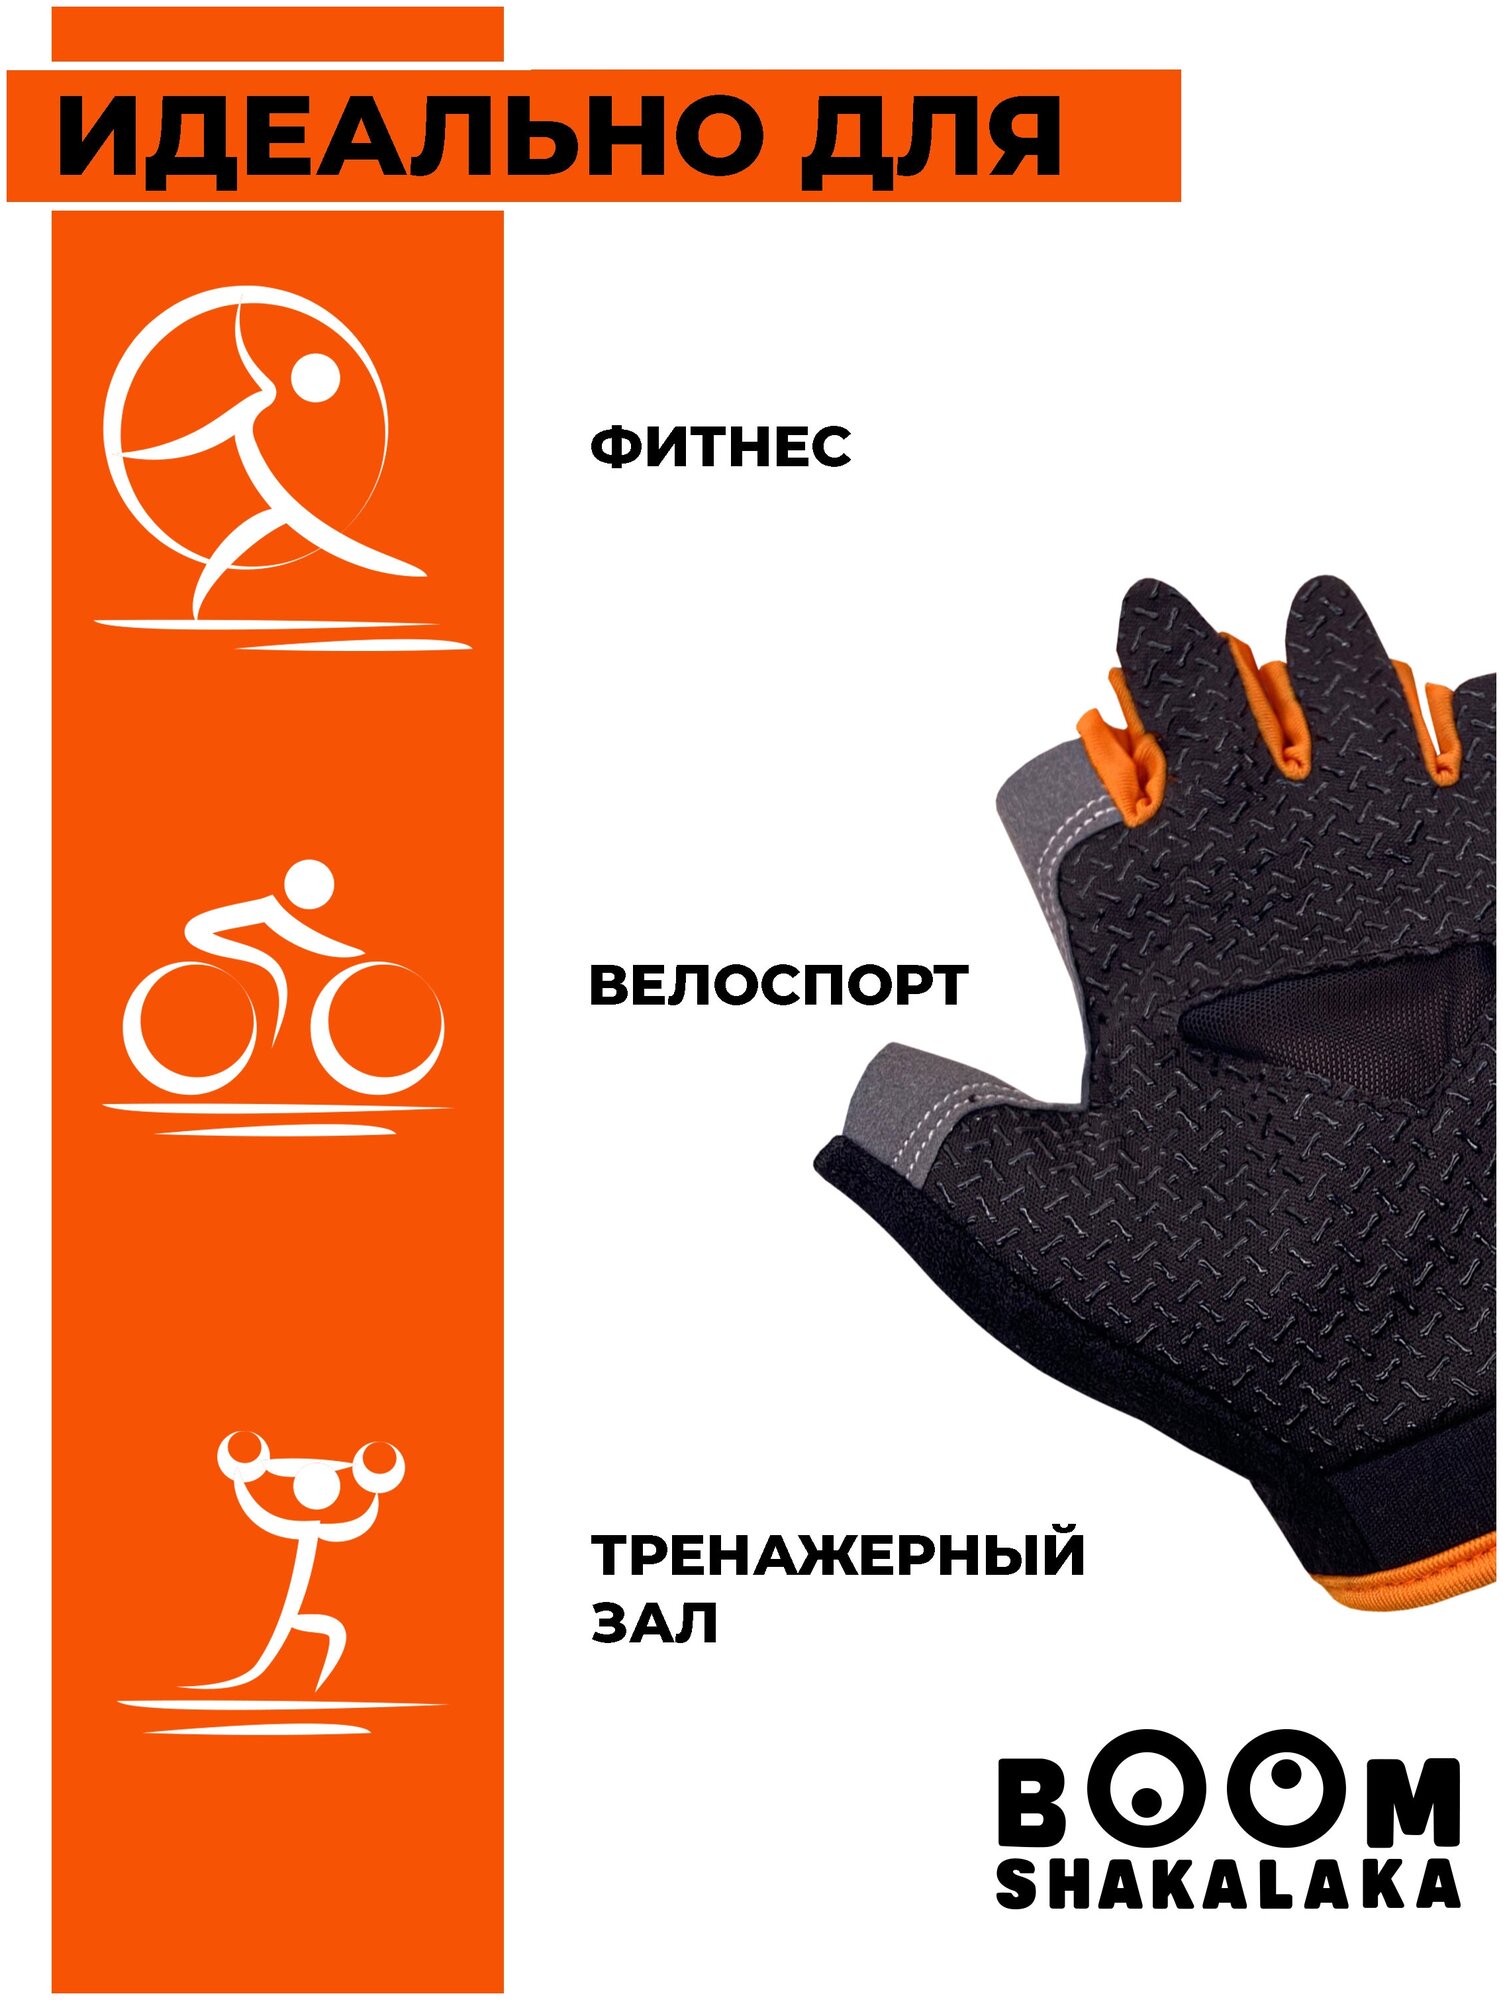 Перчатки для велоспорта Boomshakalaka, цвет черно-оранжевый, размер S, обхват ладони 180-190 мм.